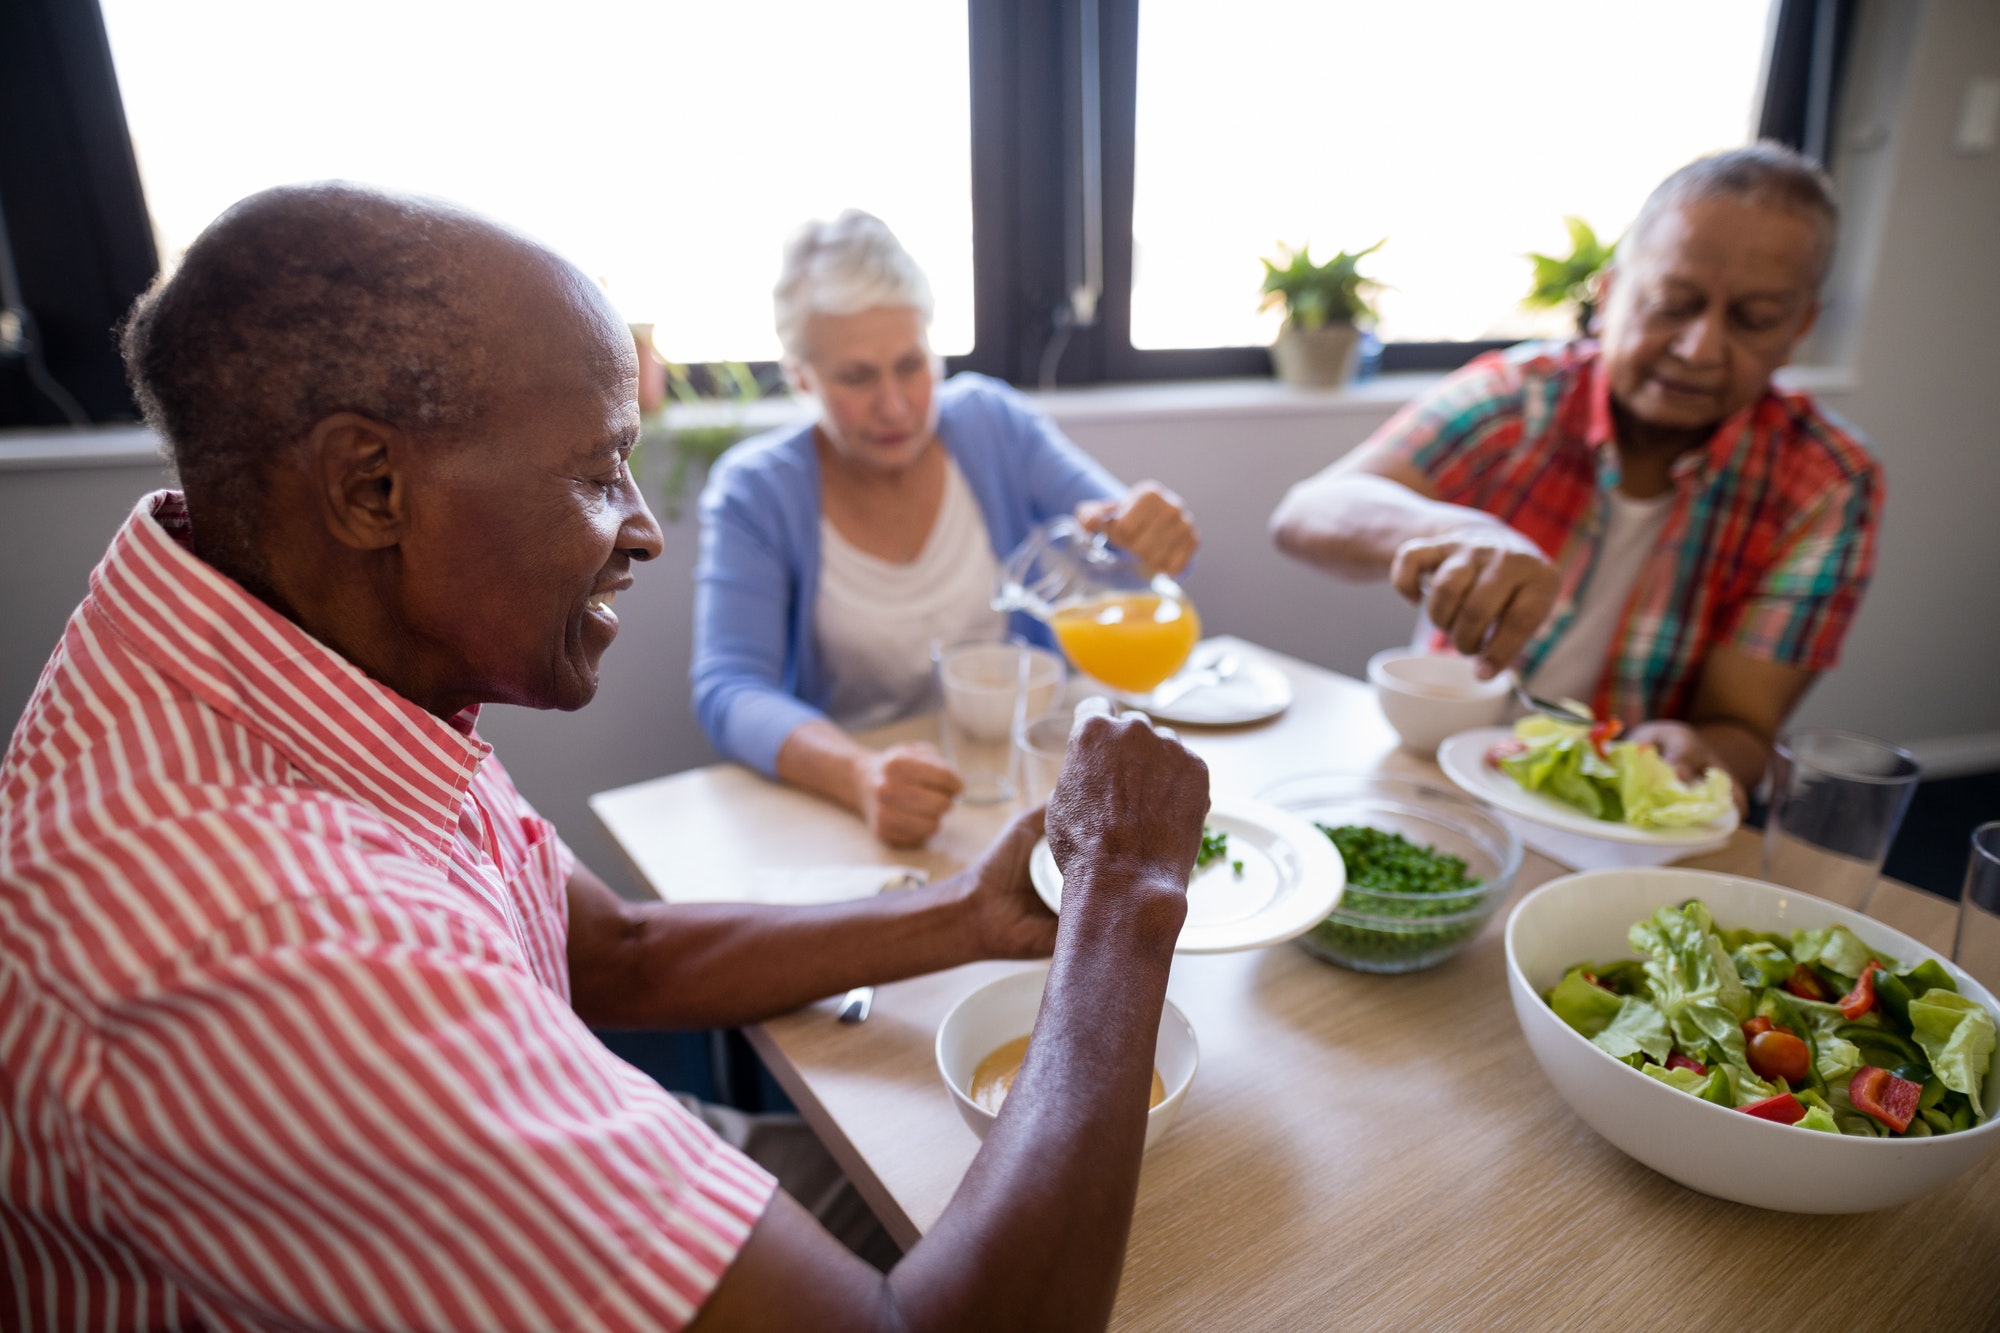 Senior people having juice and salad at table